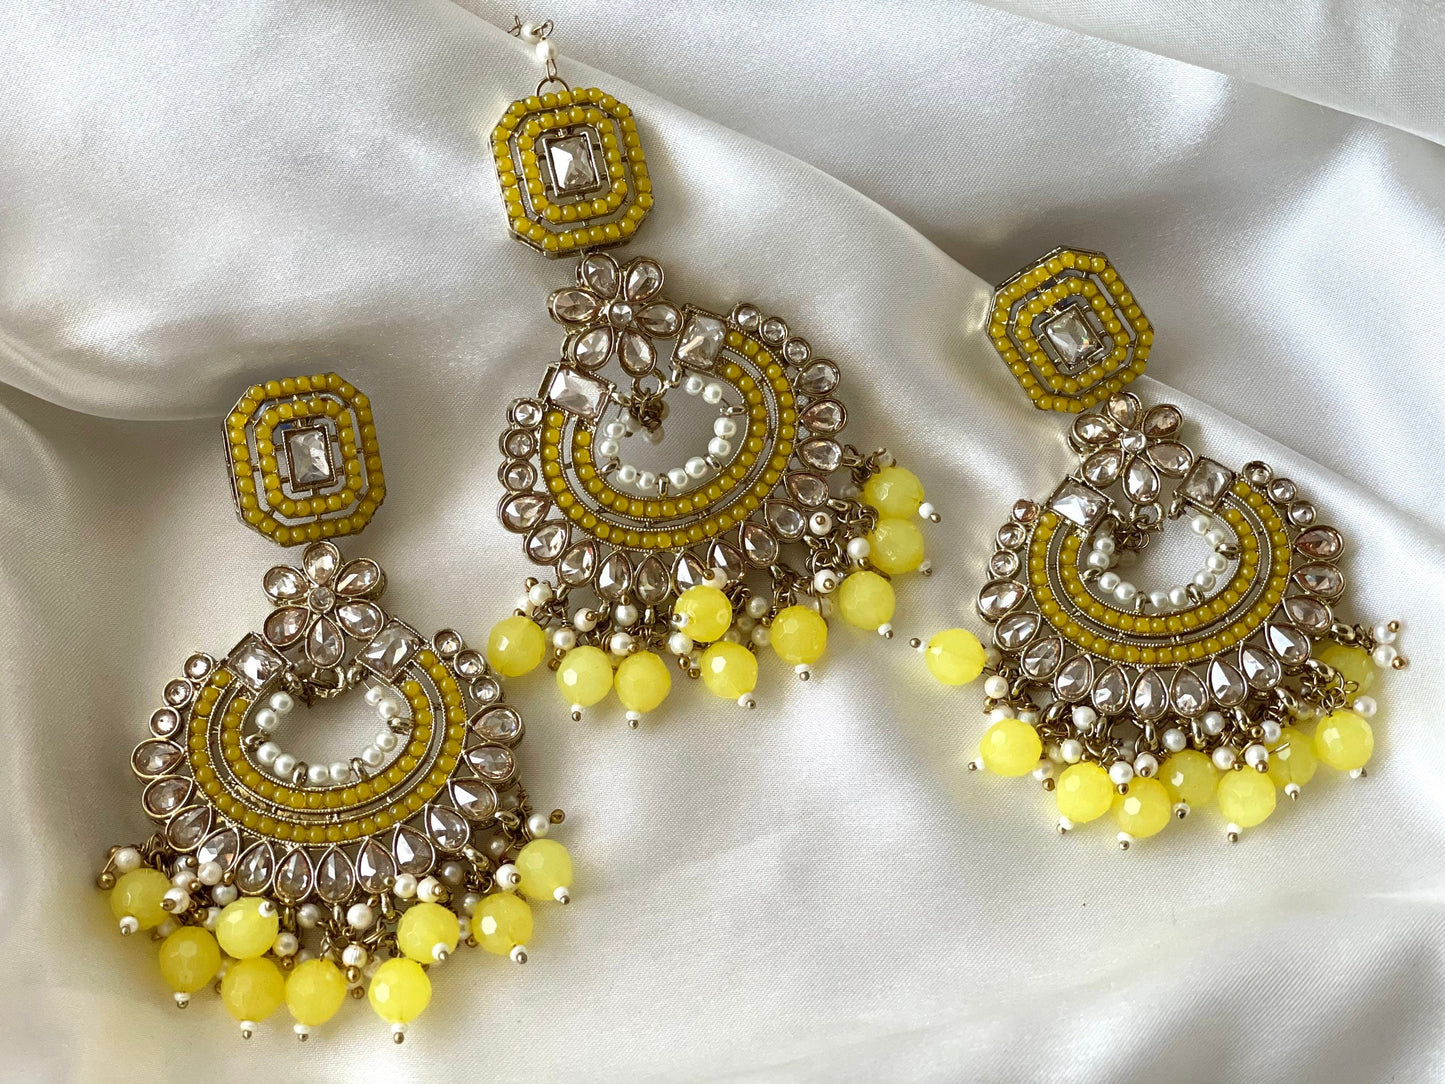 An elegant yellow tikka and earrings